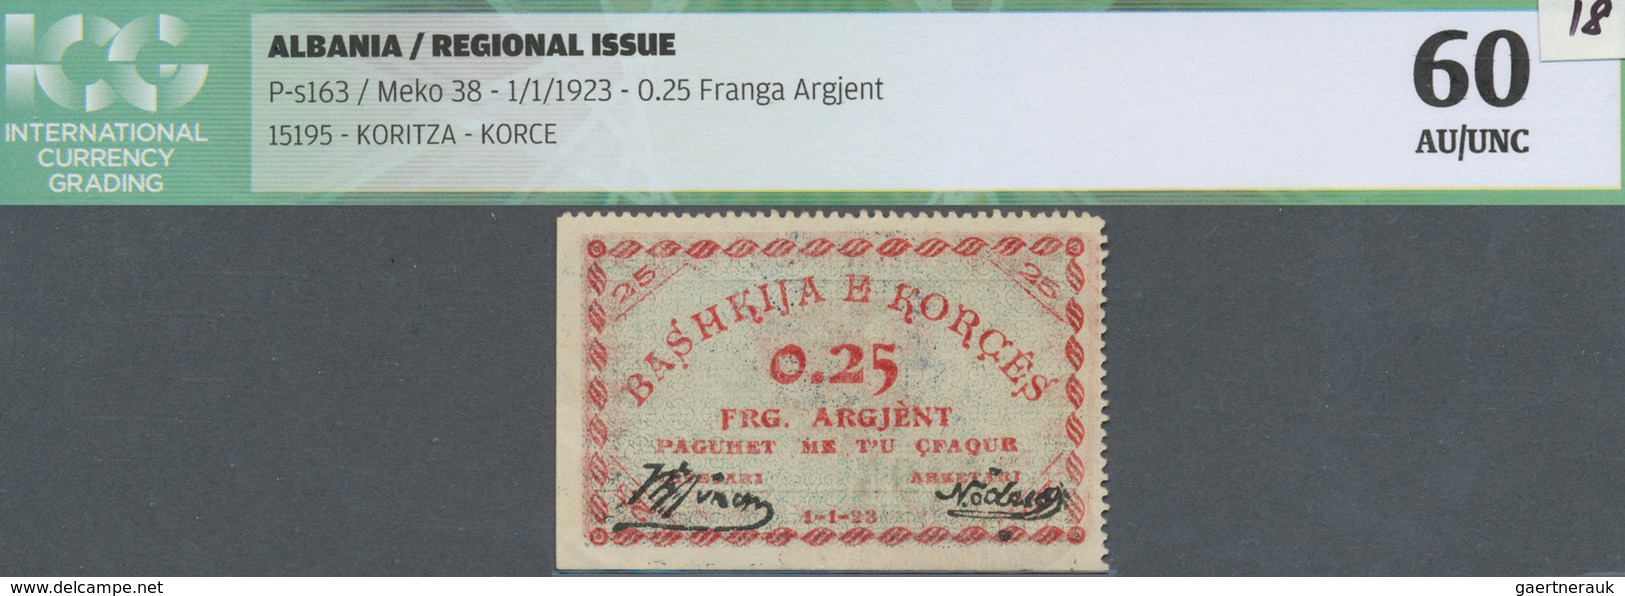 Albania / Albanien: 0.25 Franga Argjent 01.01.1923 P. S163, Unfolded, Crisp Paper And Original Color - Albanie